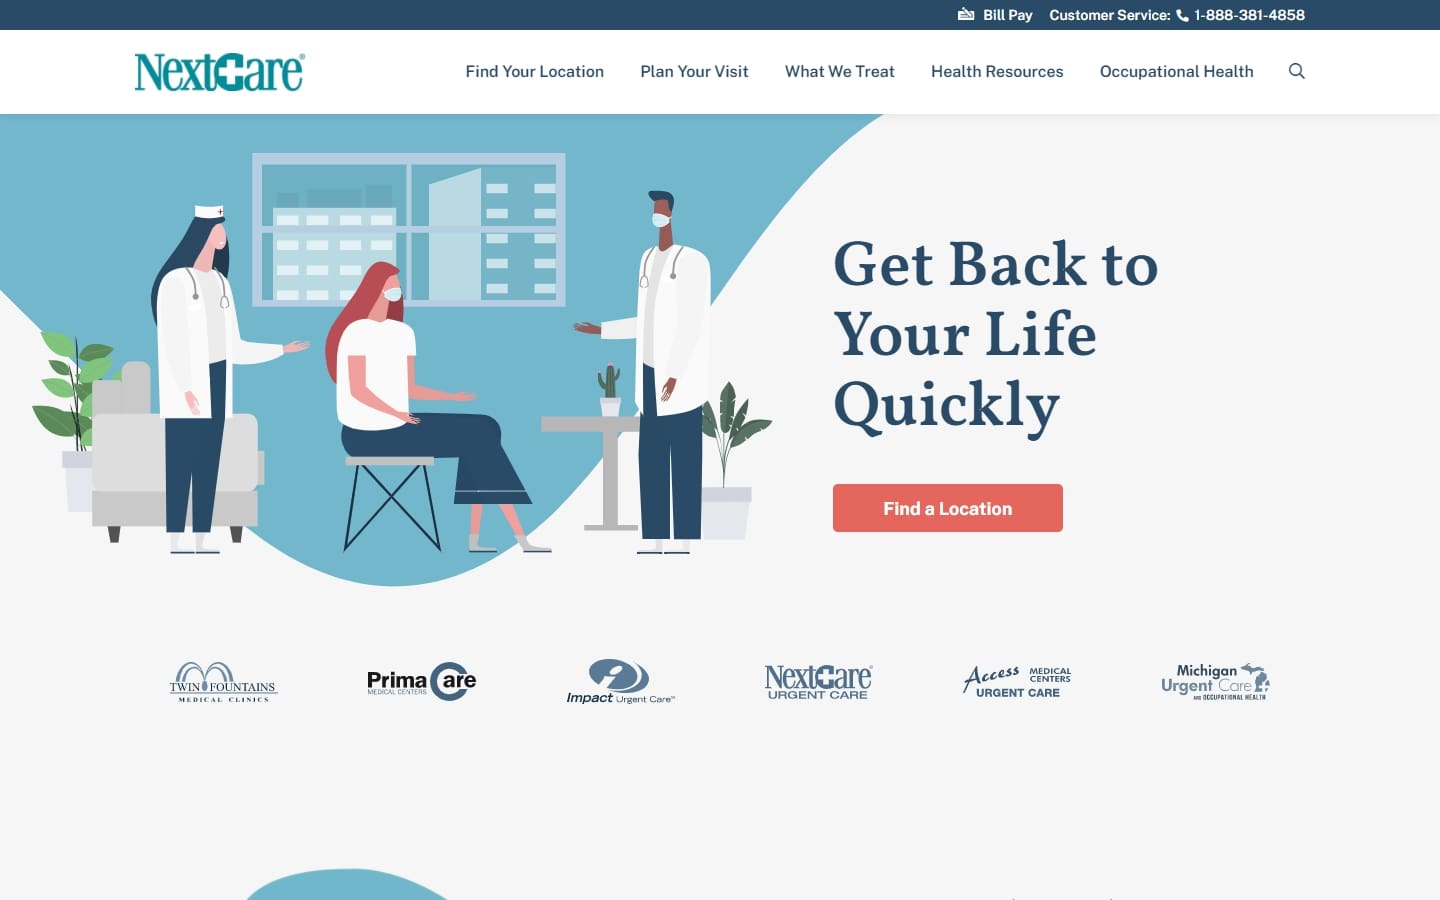 website design for doctors